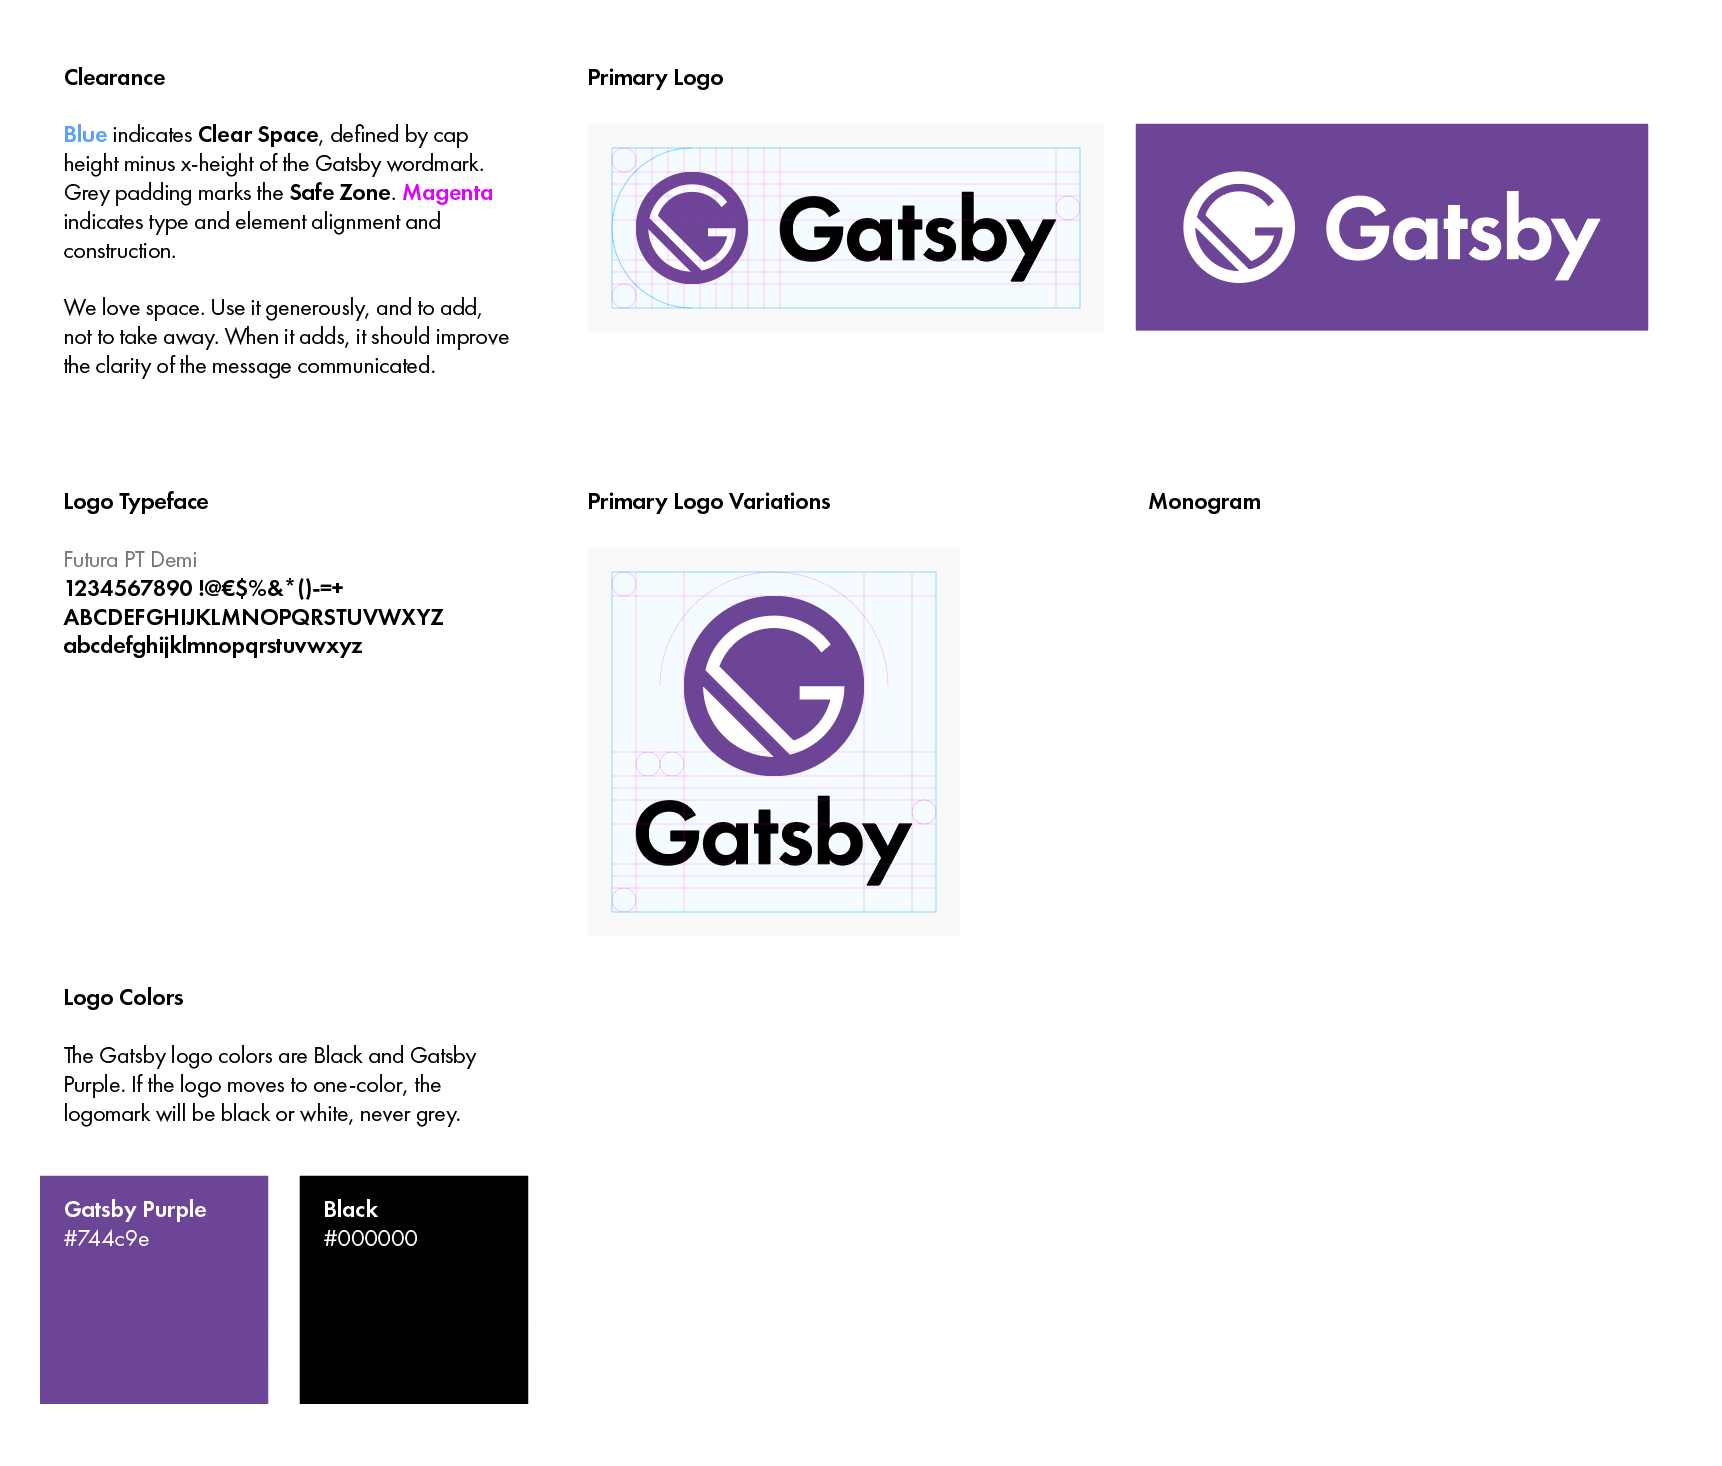 Purple with White Logo - brand] Gatsby logo definition · Issue #3363 · gatsbyjs/gatsby · GitHub